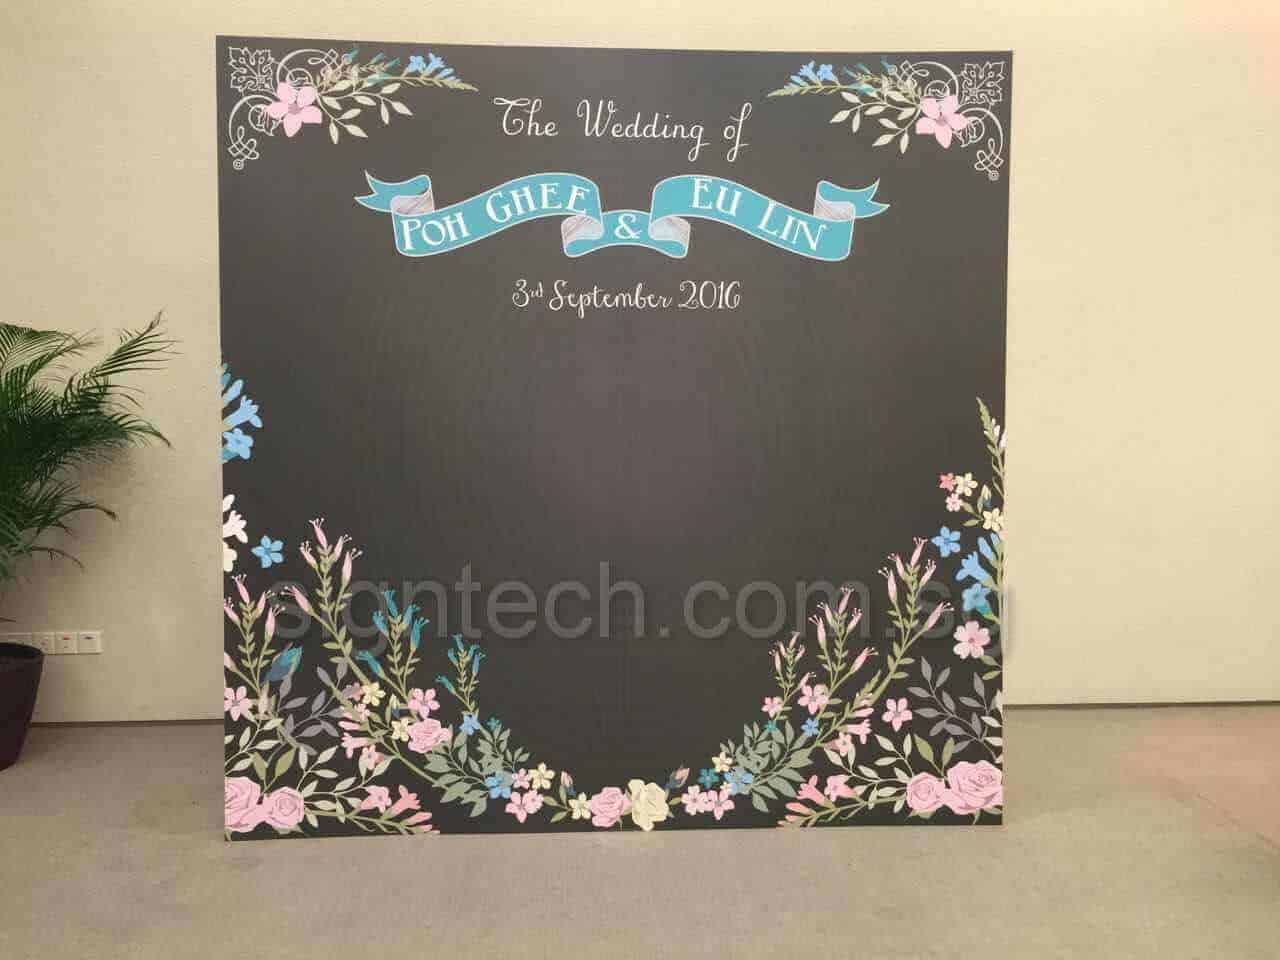 8 x 8ft disposable foam board backdrop for wedding